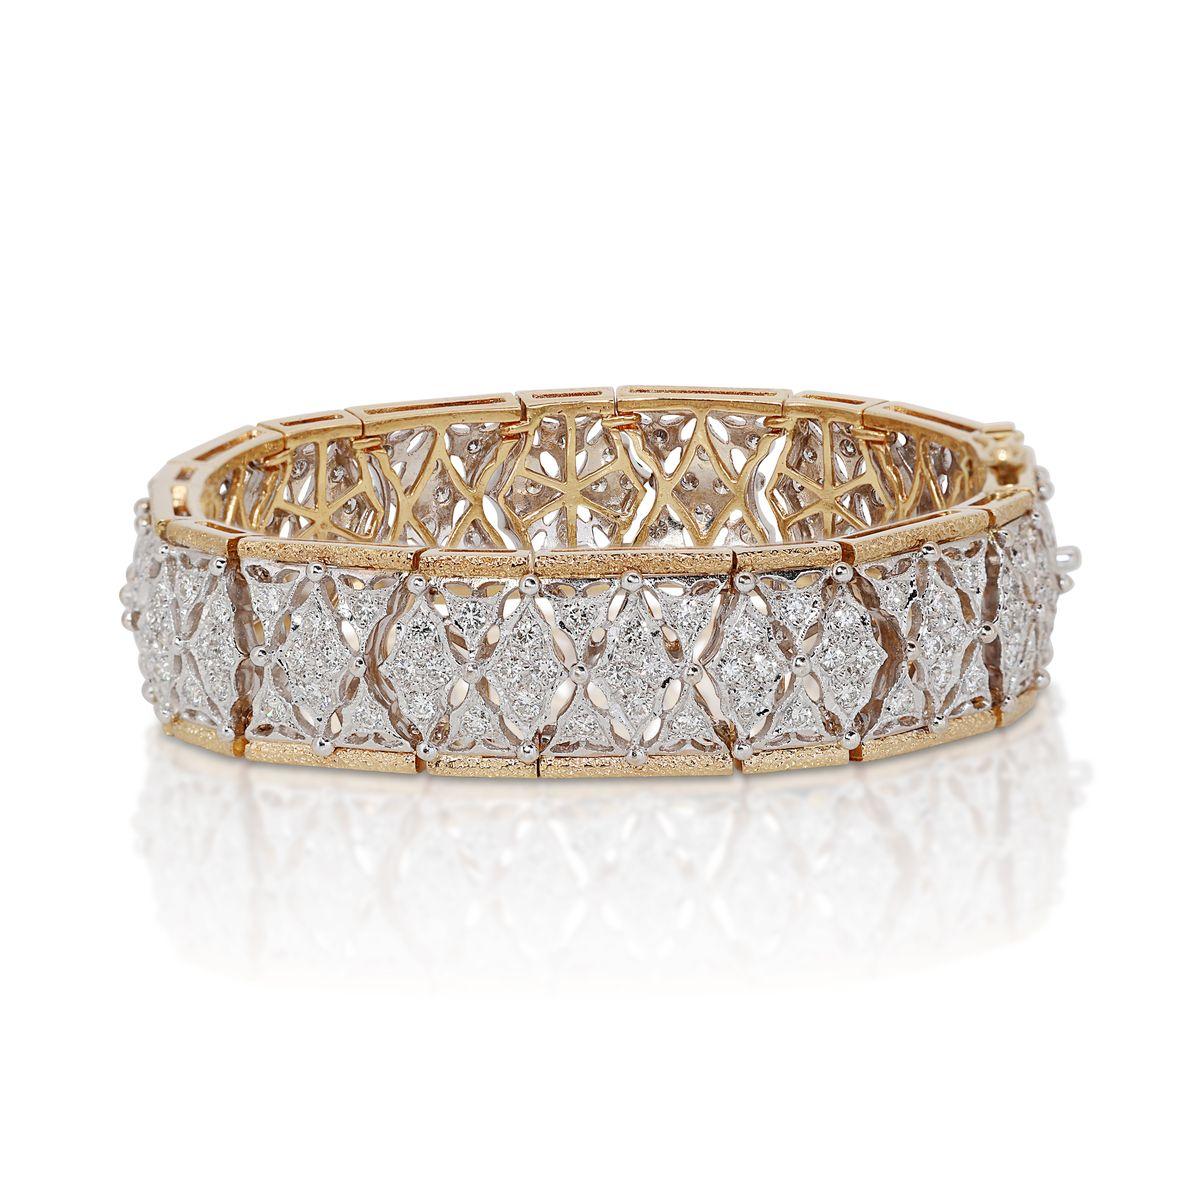 Round Cut Stunning 18K Yellow Gold Bracelet with 1.65 ct Natural Diamonds IGI Cert For Sale